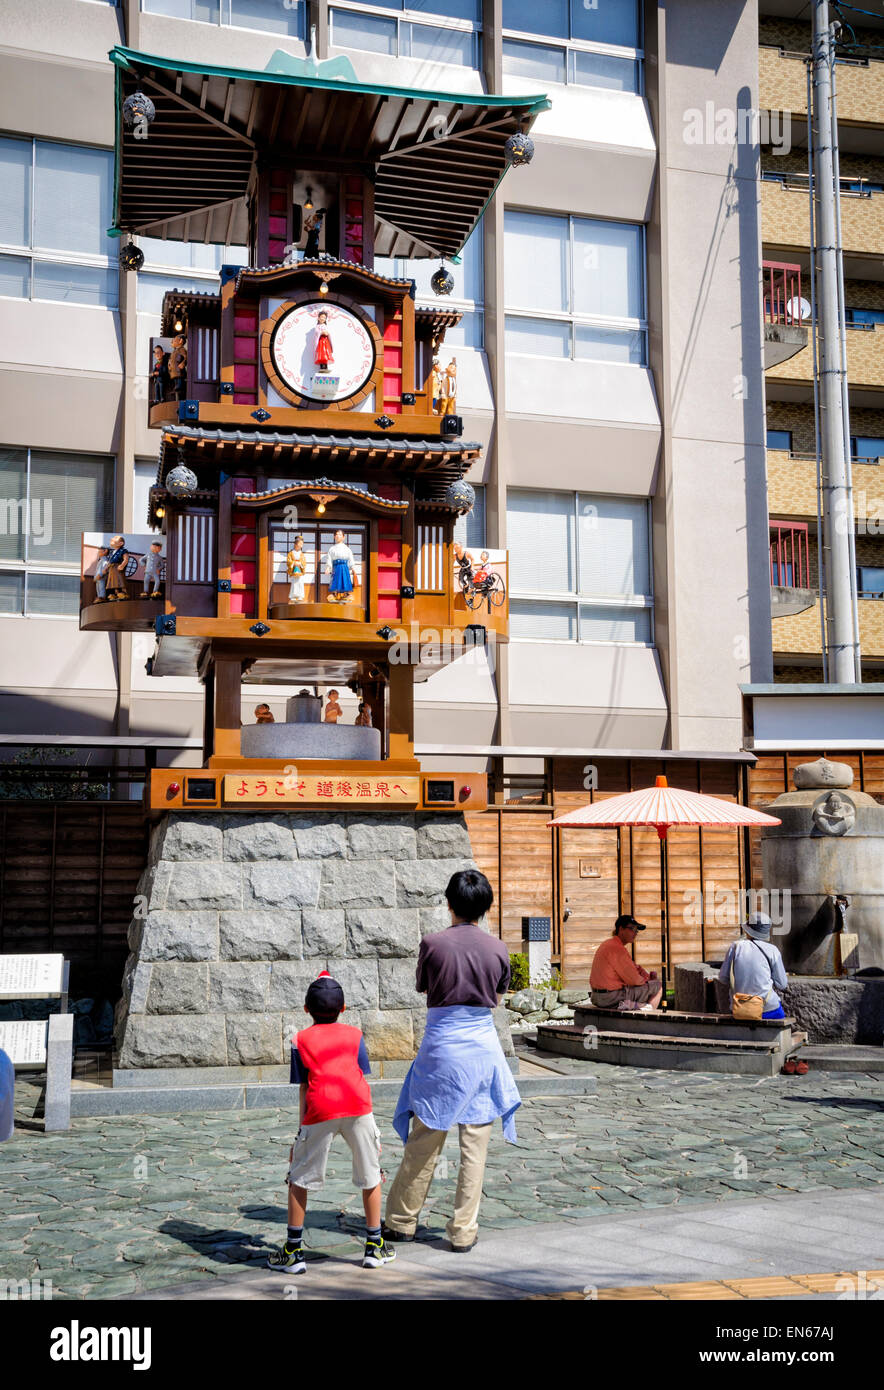 Botchan Karakuri Uhr: gebaut in Dogo Onsen, Shikoku, Japan Natsume Soseki gedenken. Vater & Sohn zusehen, wie die mechanischen Figuren ausführen. Stockfoto